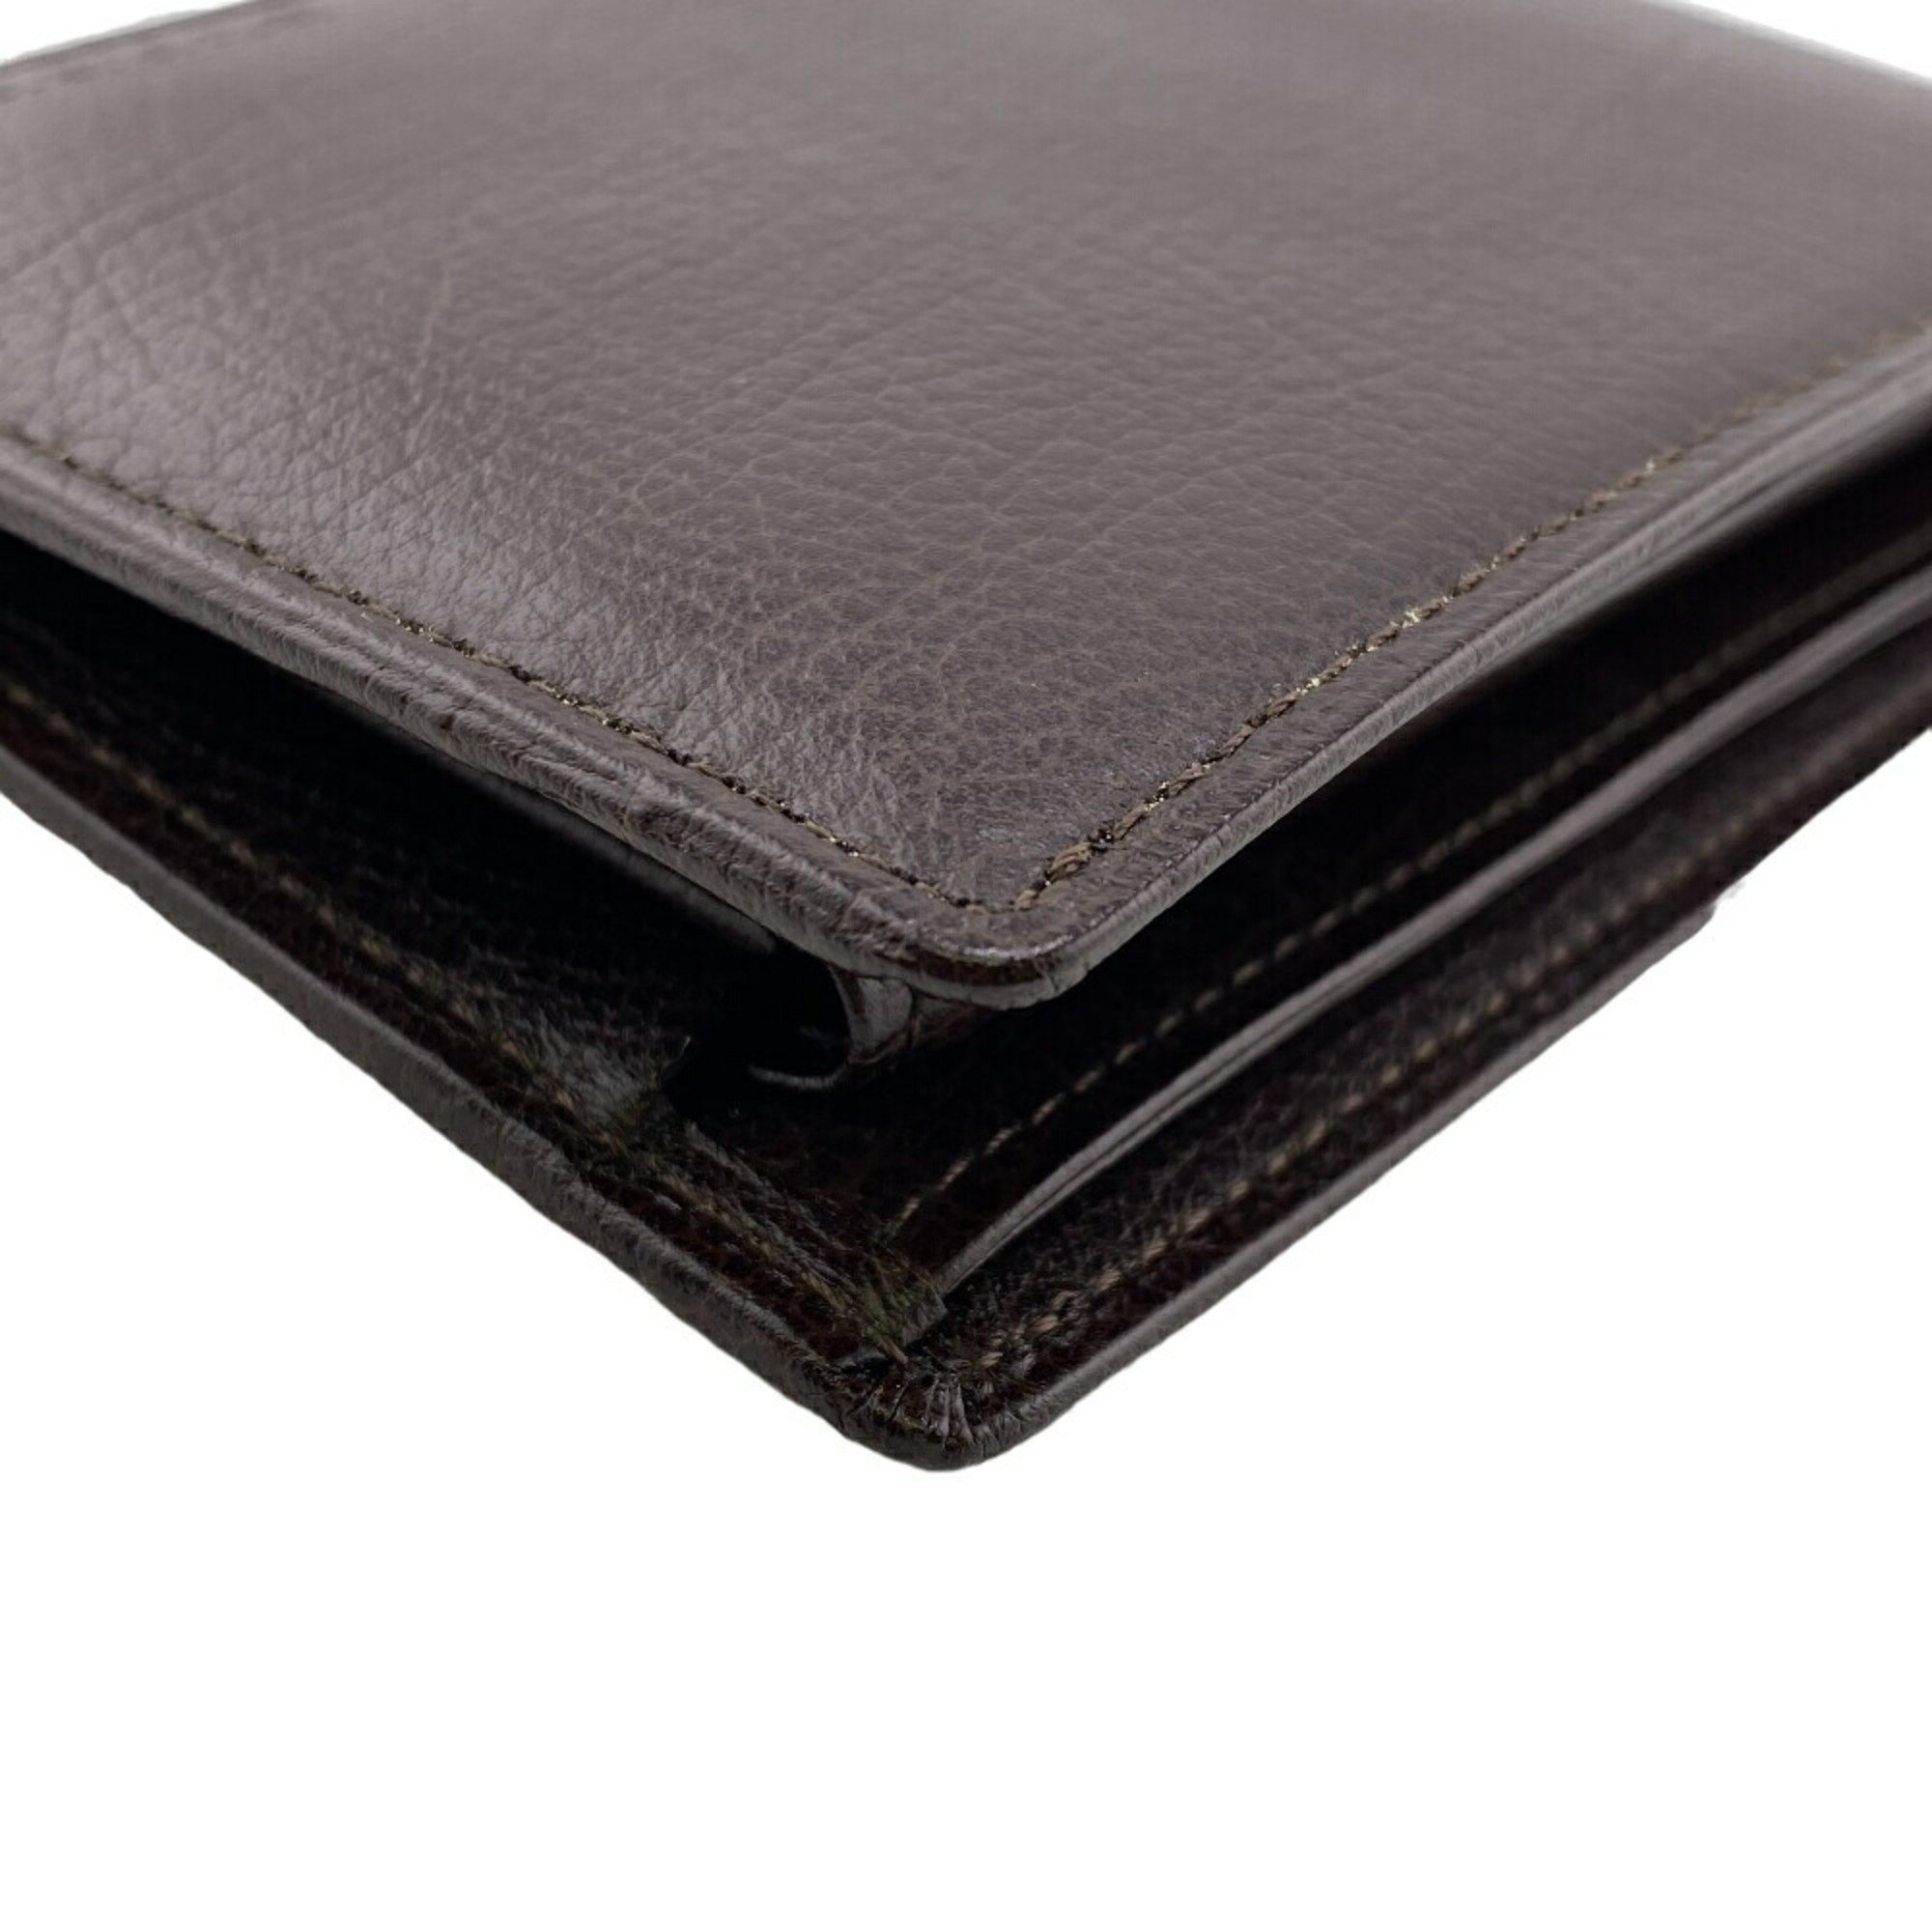 BURBERRY Embossed Nova Check Bi-fold Wallet Brown Men's Z0006957